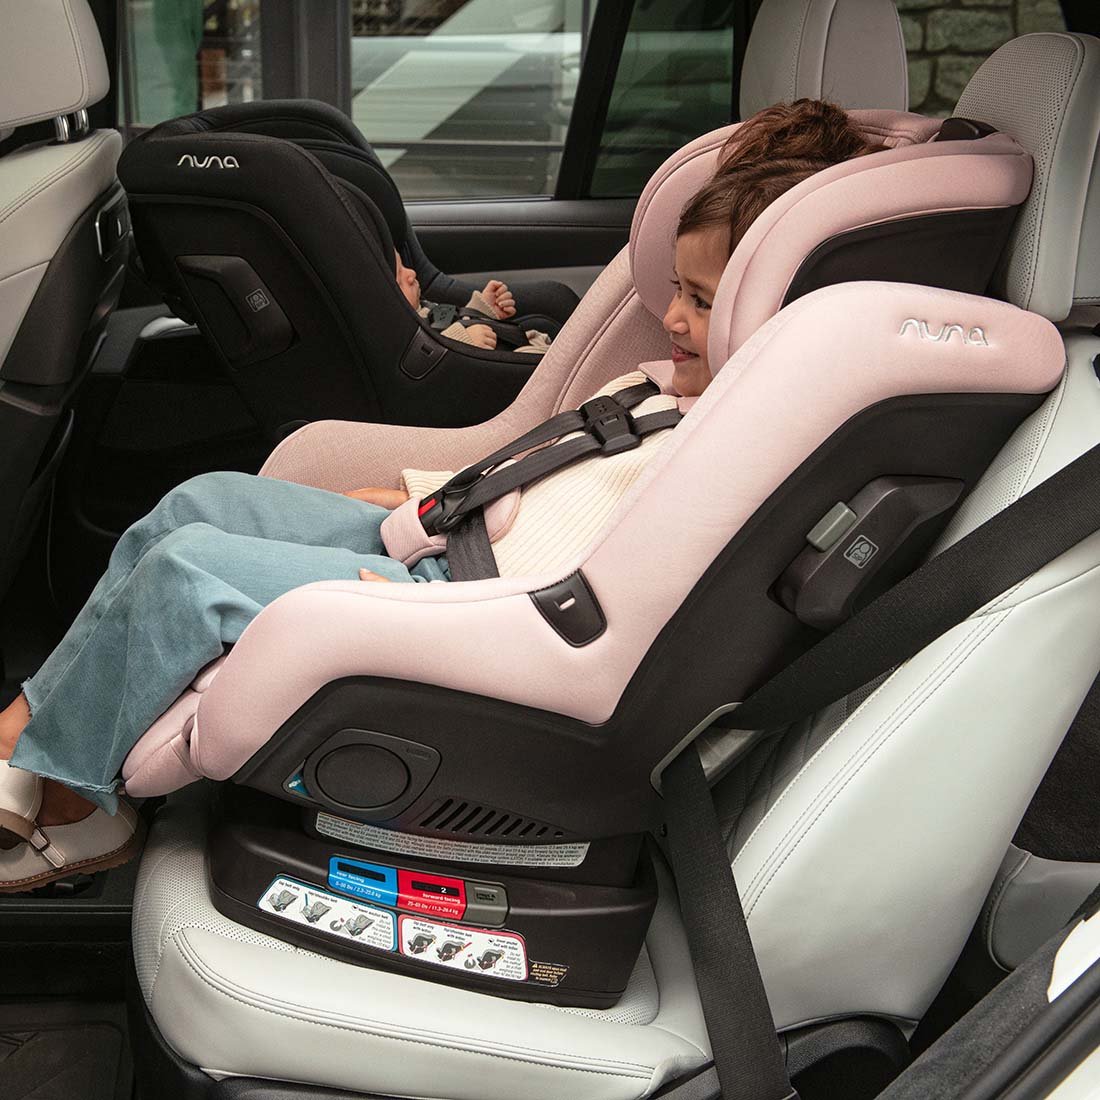 NUNA RAVA Convertible Car Seat (Flame Retardant Free), -- ANB Baby